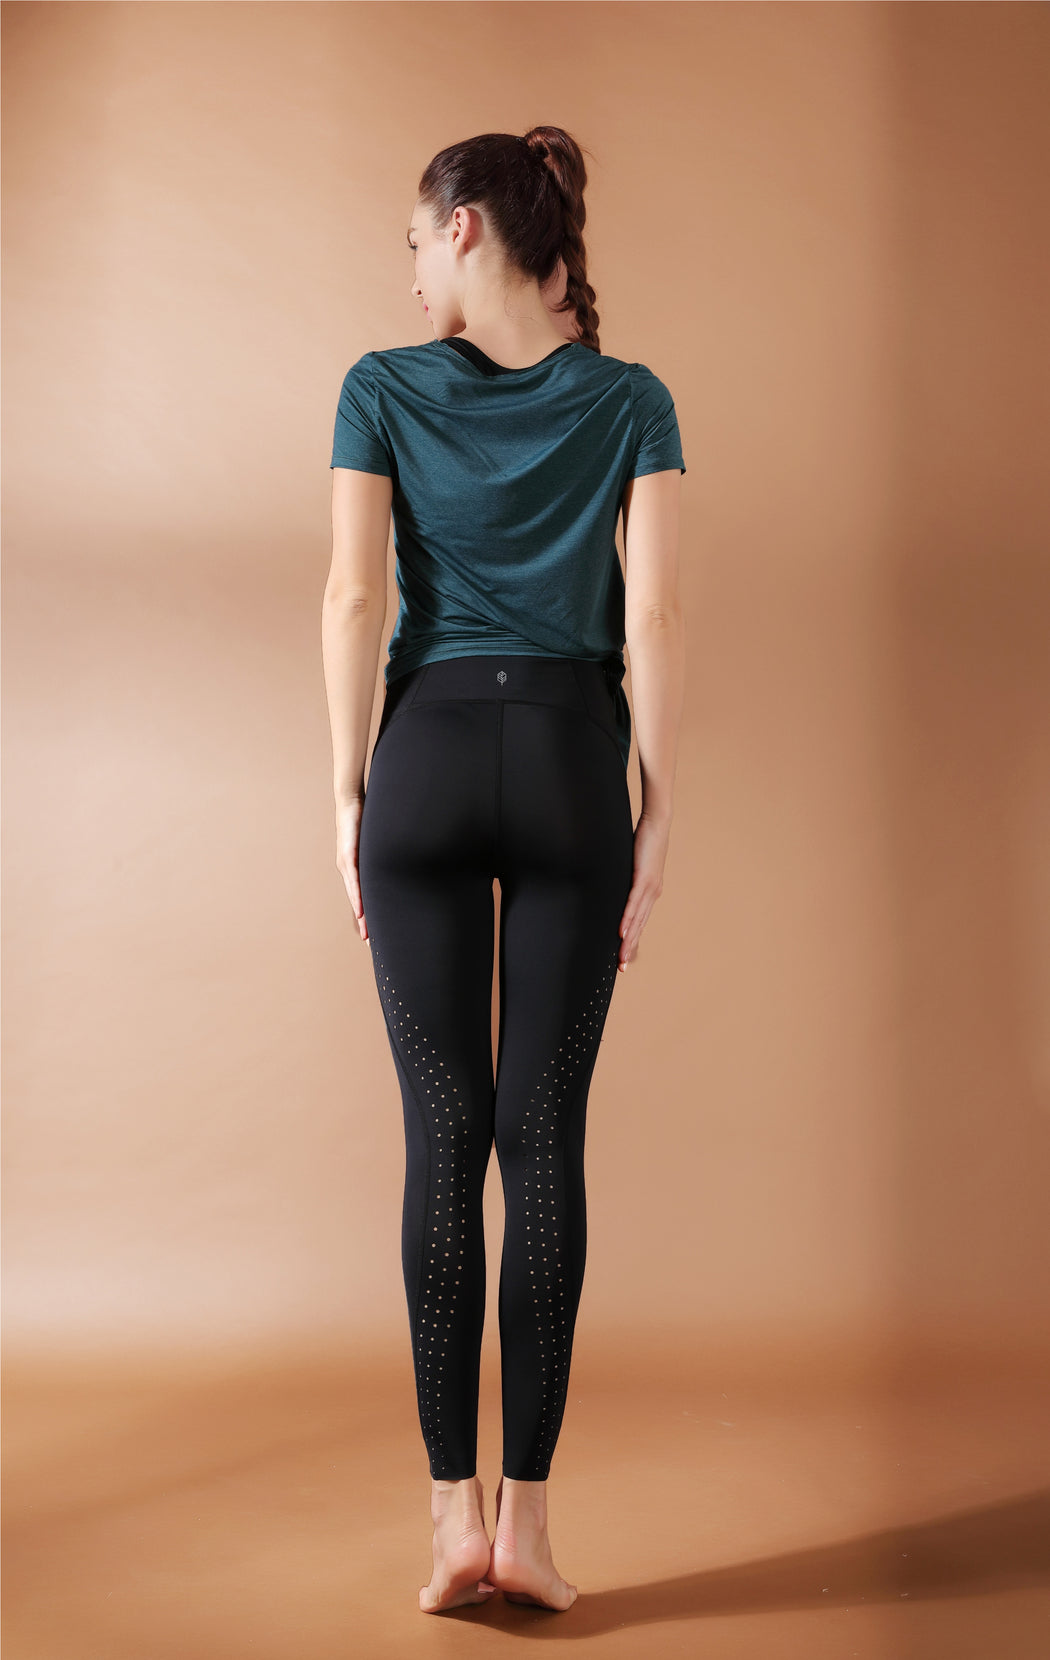 Form-fitting Yoga Pants with Contour Mesh Design - lotsofyoga